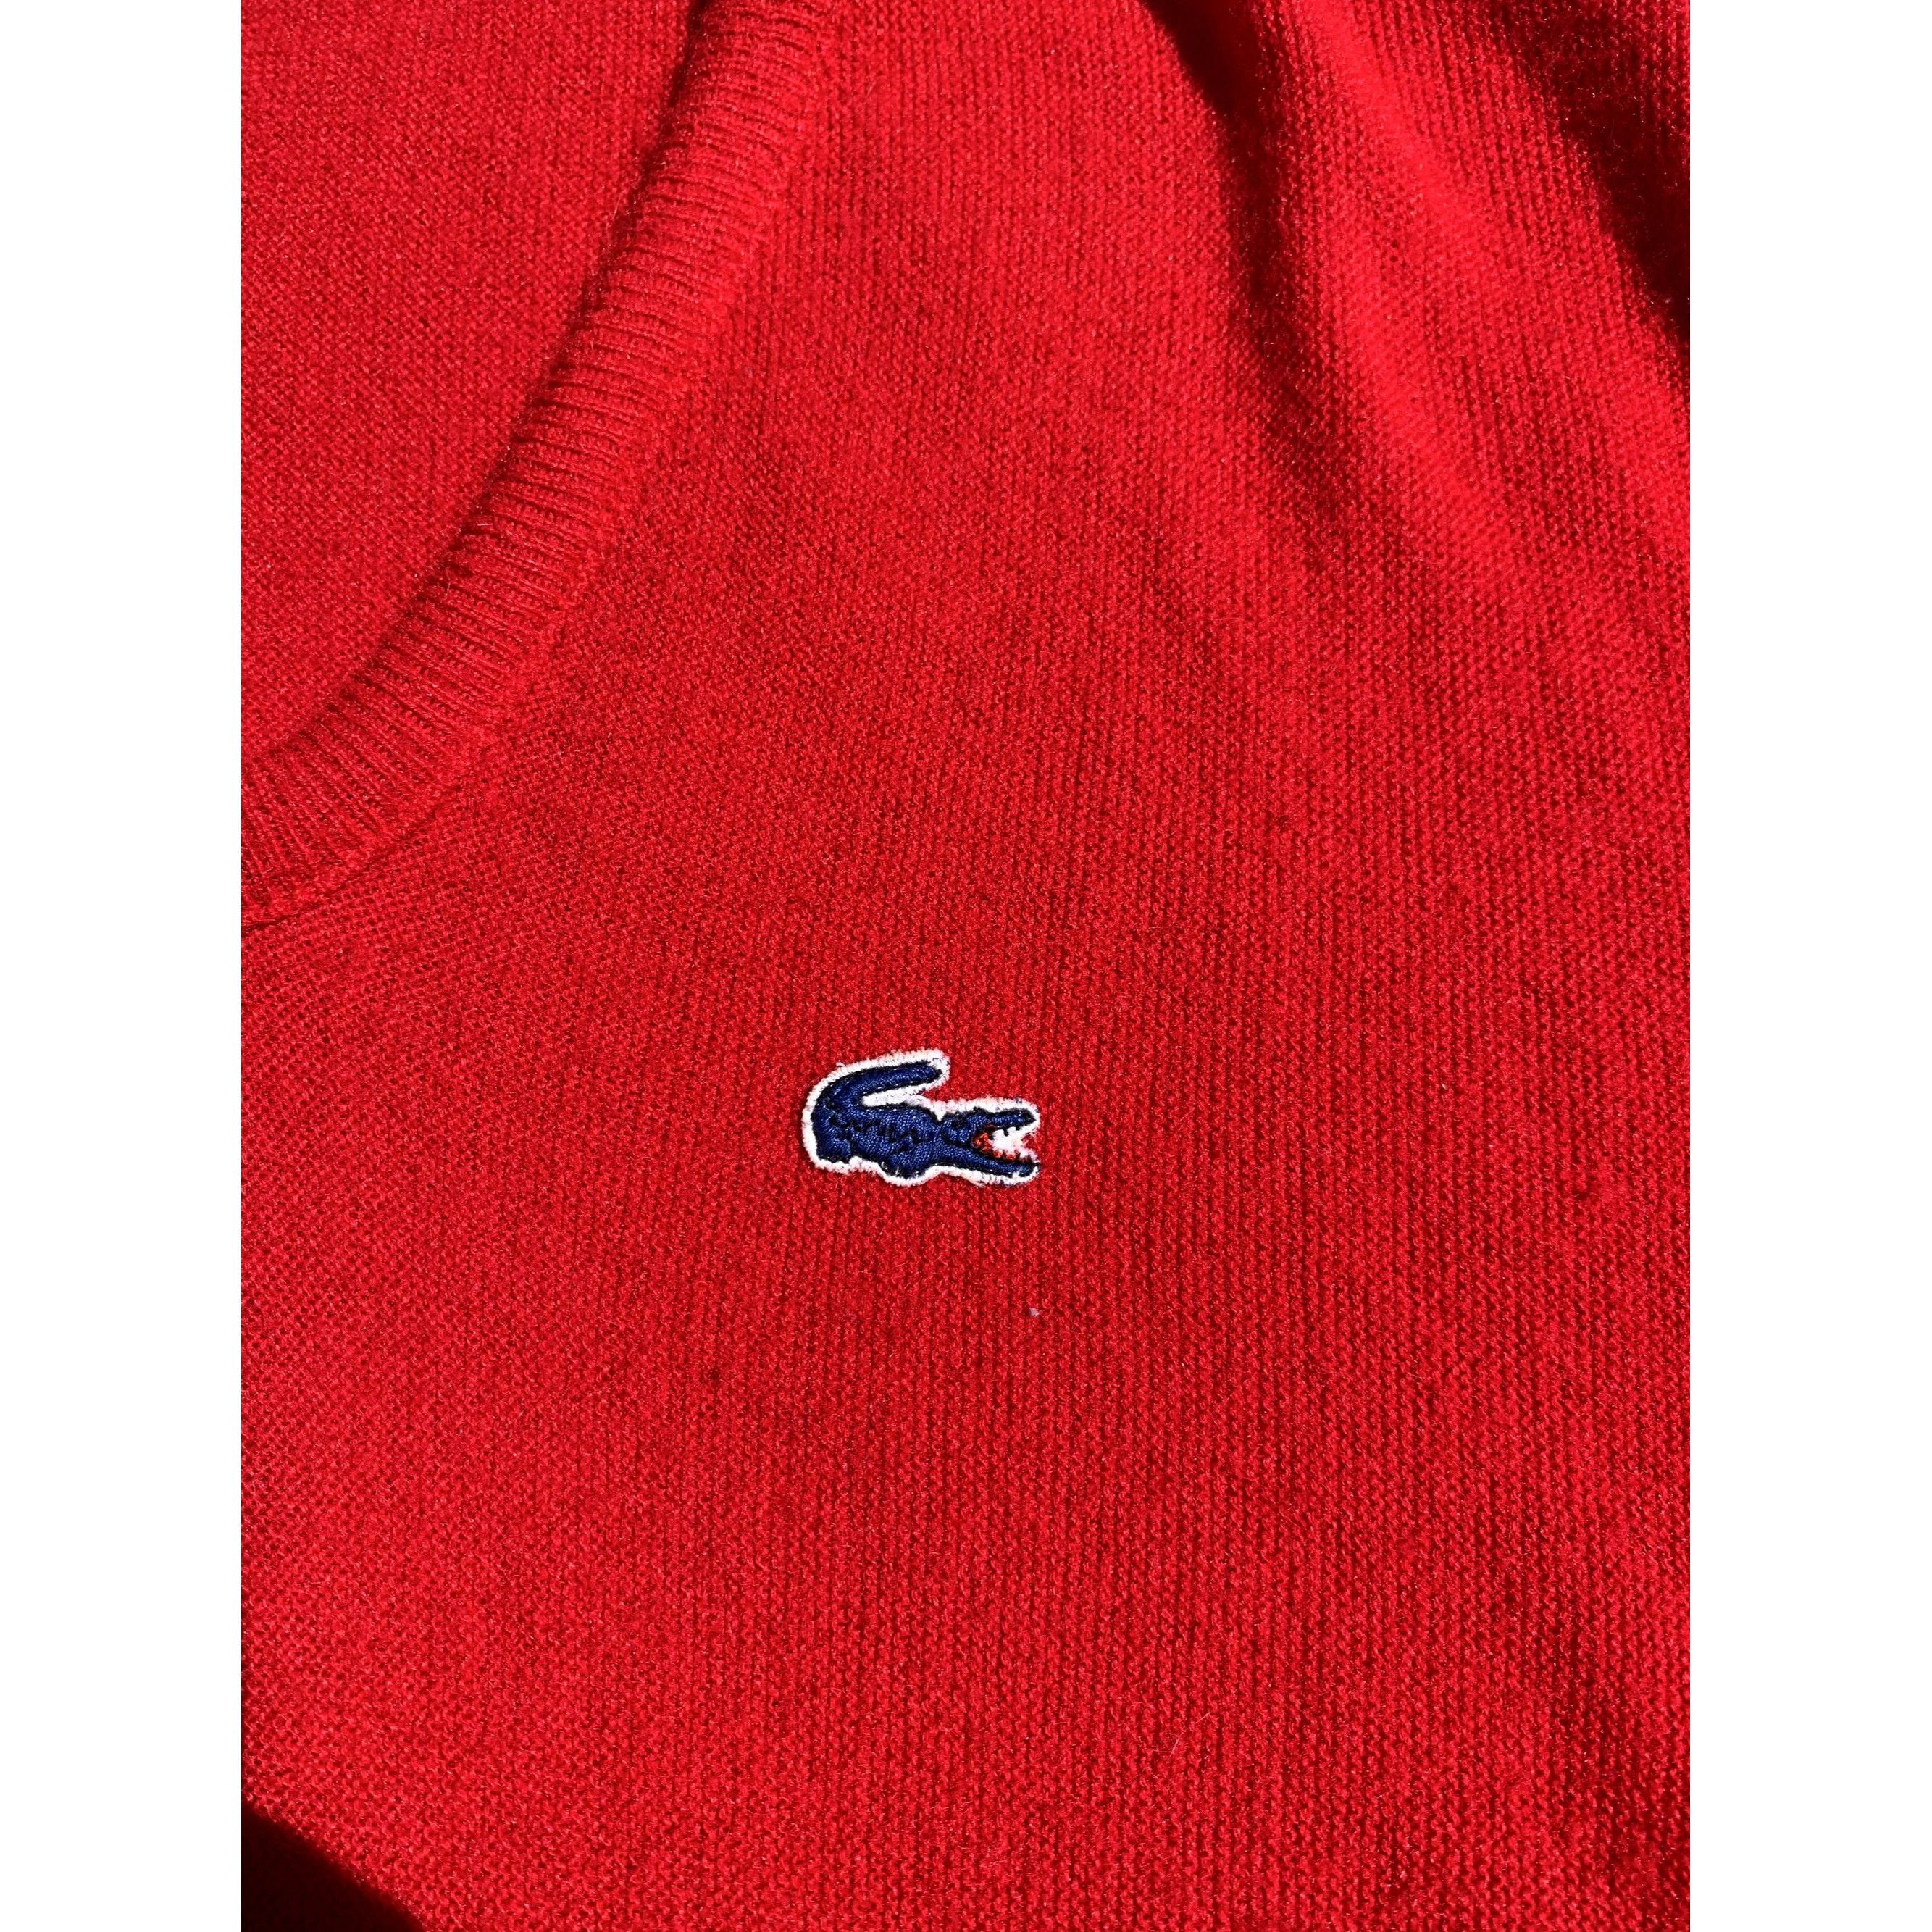 Vintage Lacoste Vintage 1970s Men's Red Pullover Sweater Large Size US L / EU 52-54 / 3 - 2 Preview